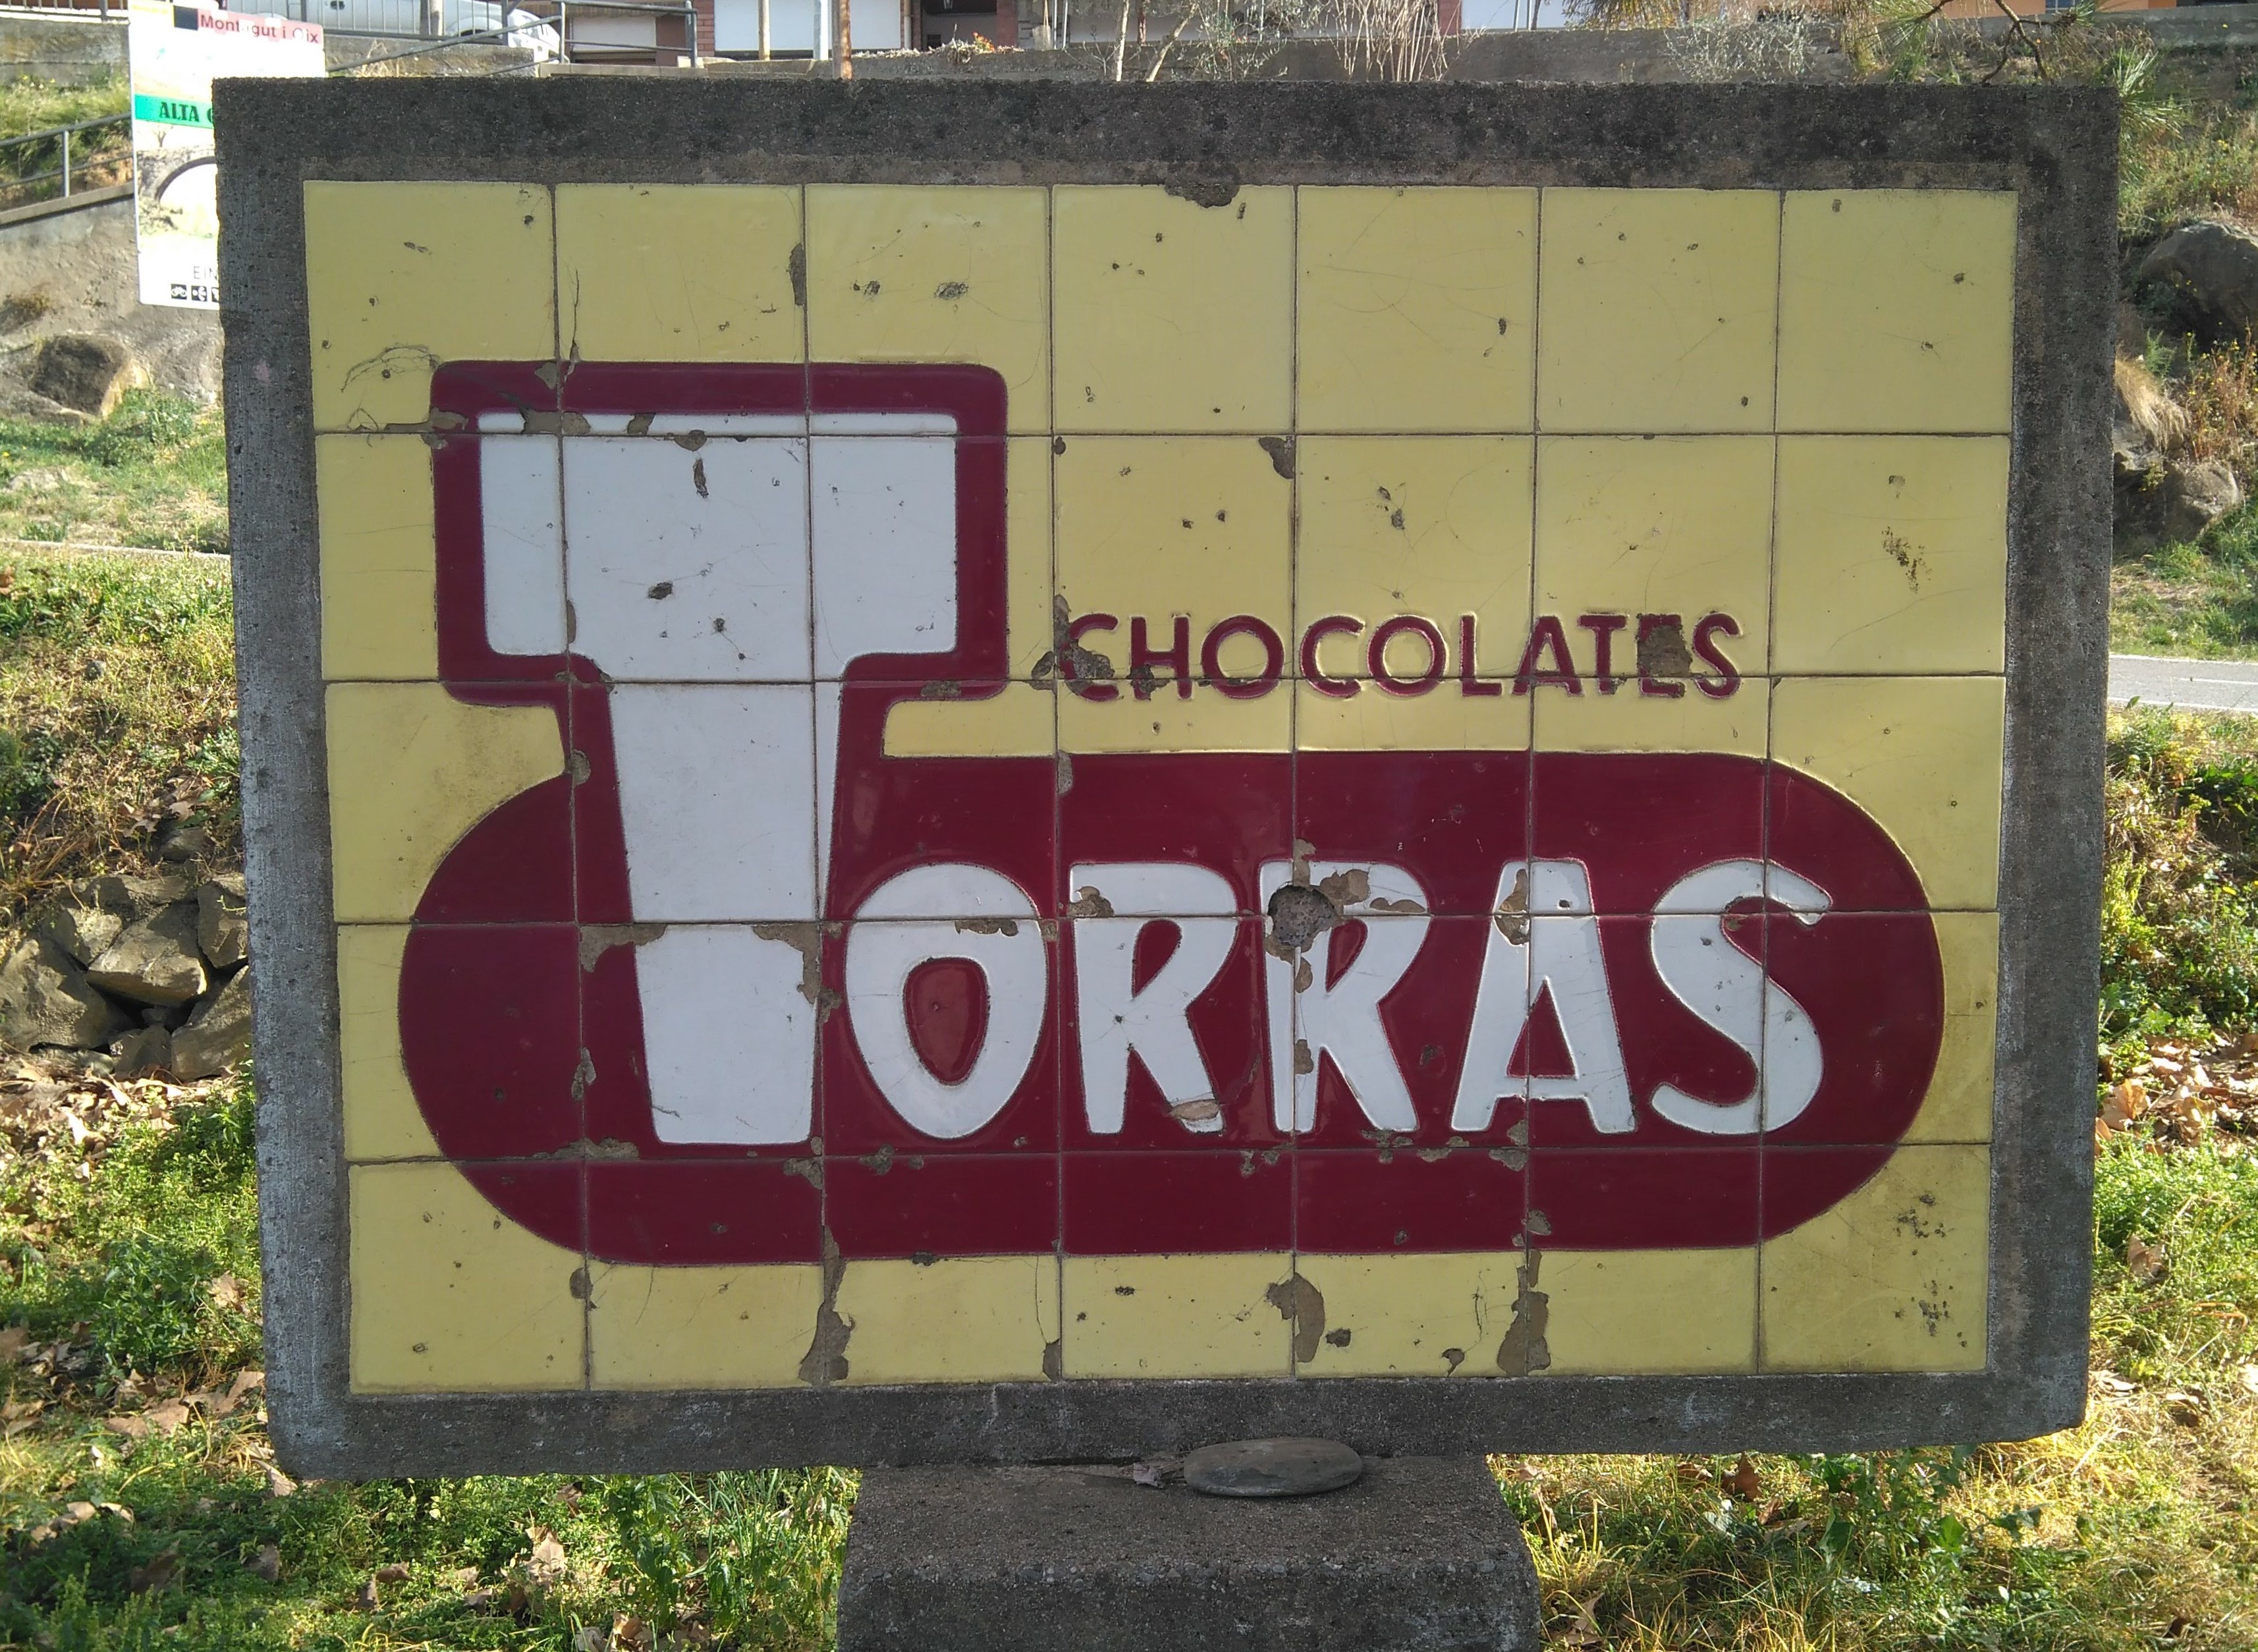 La campanya publicitària de Chocolates Torras